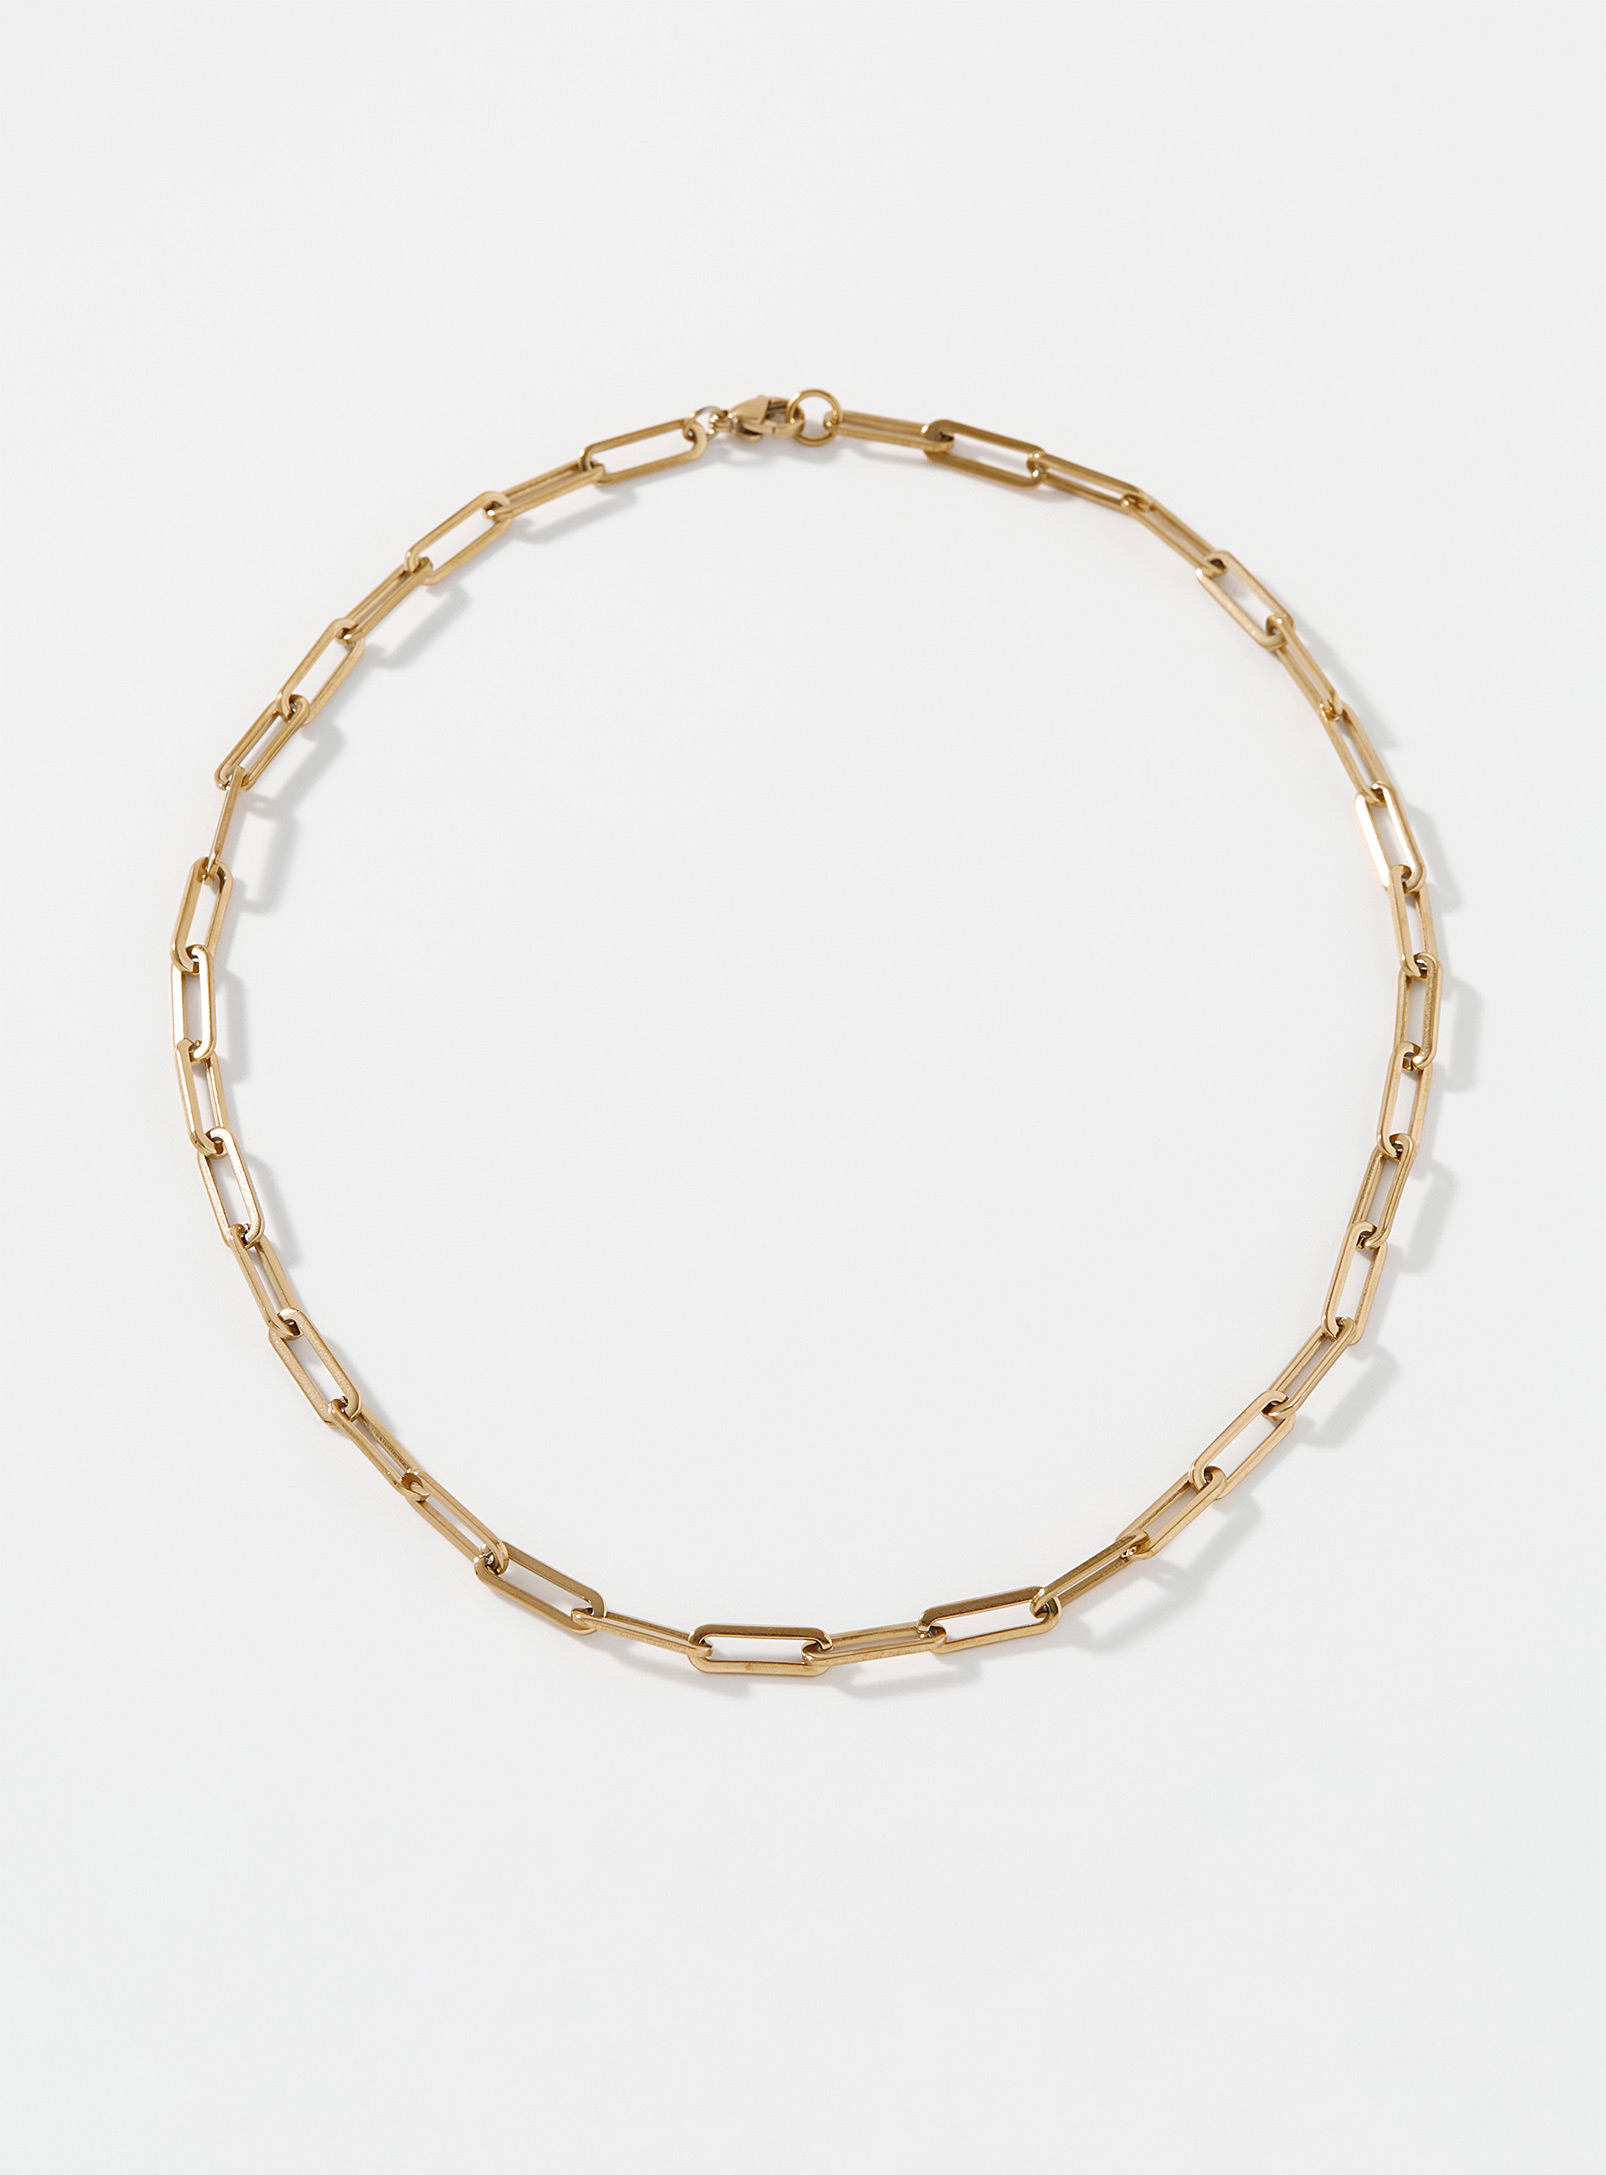 Simons - Women's Golden paperclip chain